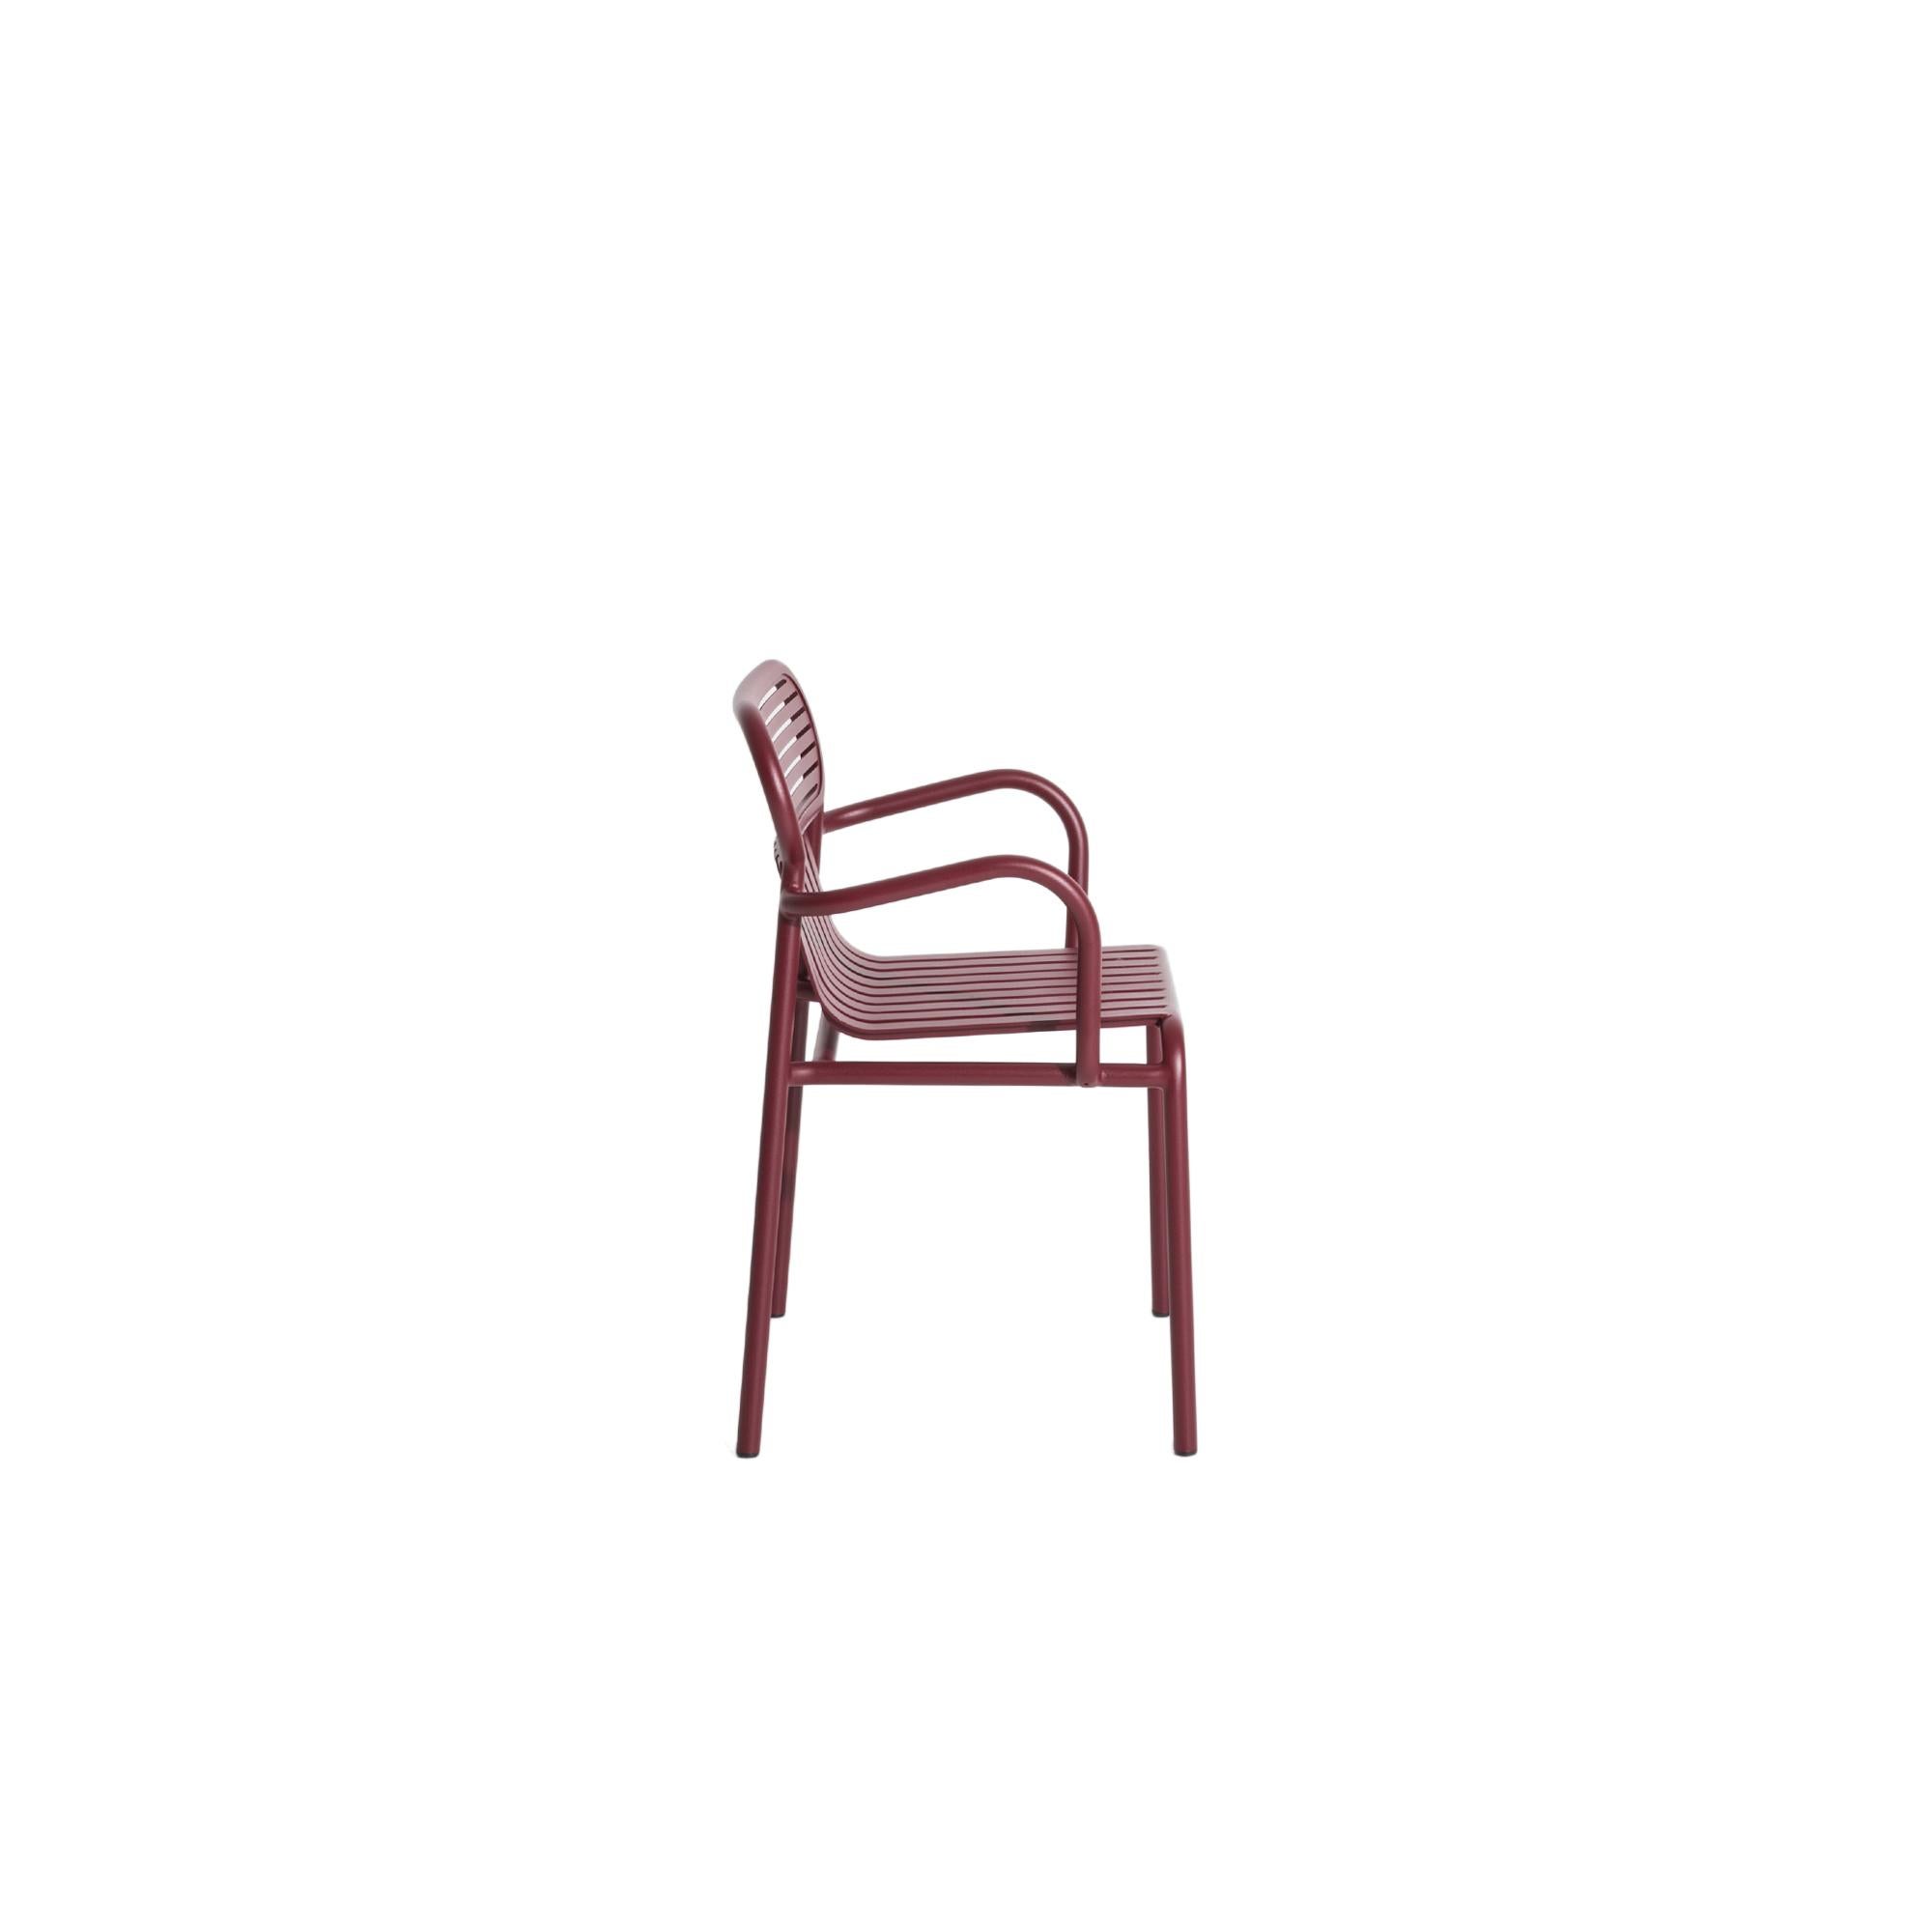 Chinese Petite Friture Week-End Bridge Chair in Burgundy Aluminium, 2017 For Sale